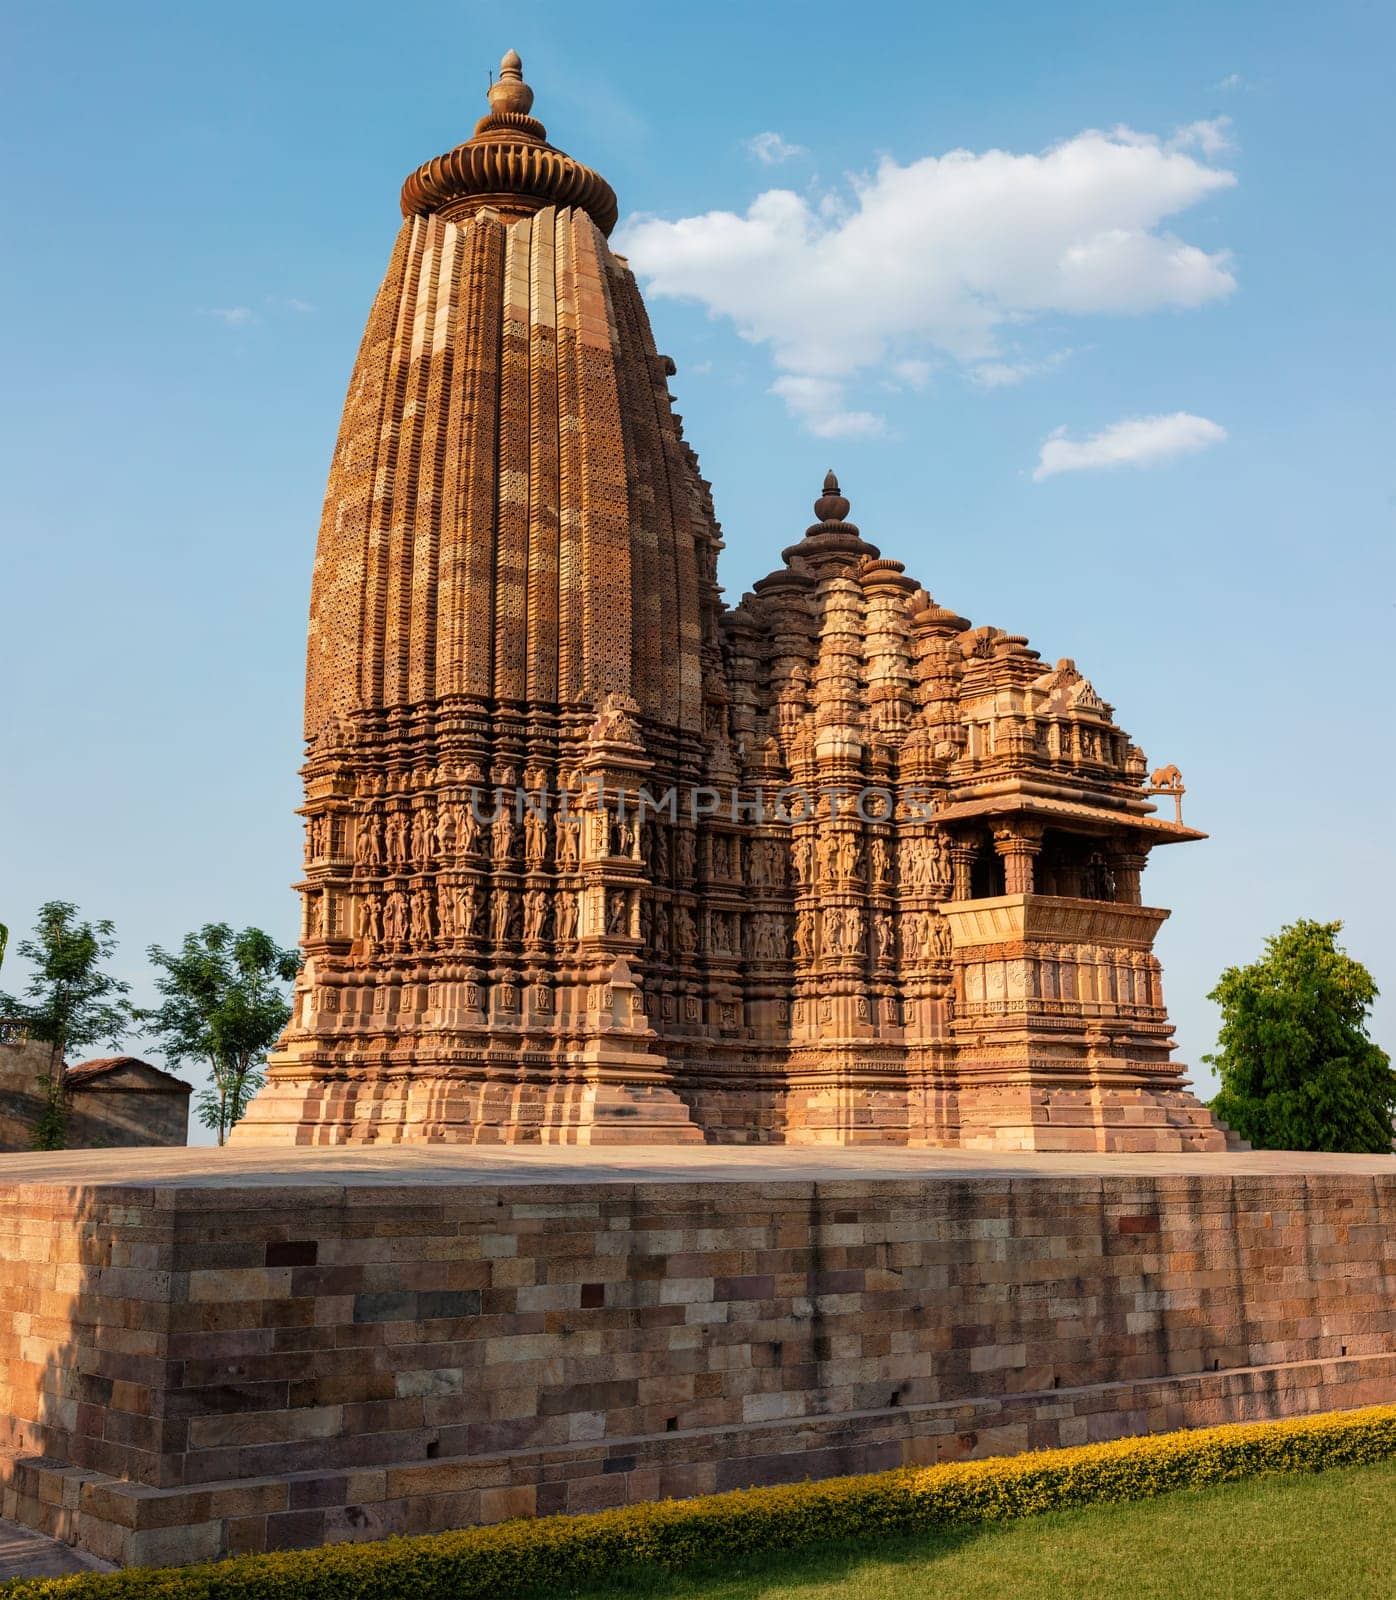 Vamana Temple - one of famous tourist attractions of Khajuraho with sculptures. India, Khajuraho, Madhya Pradesh, India